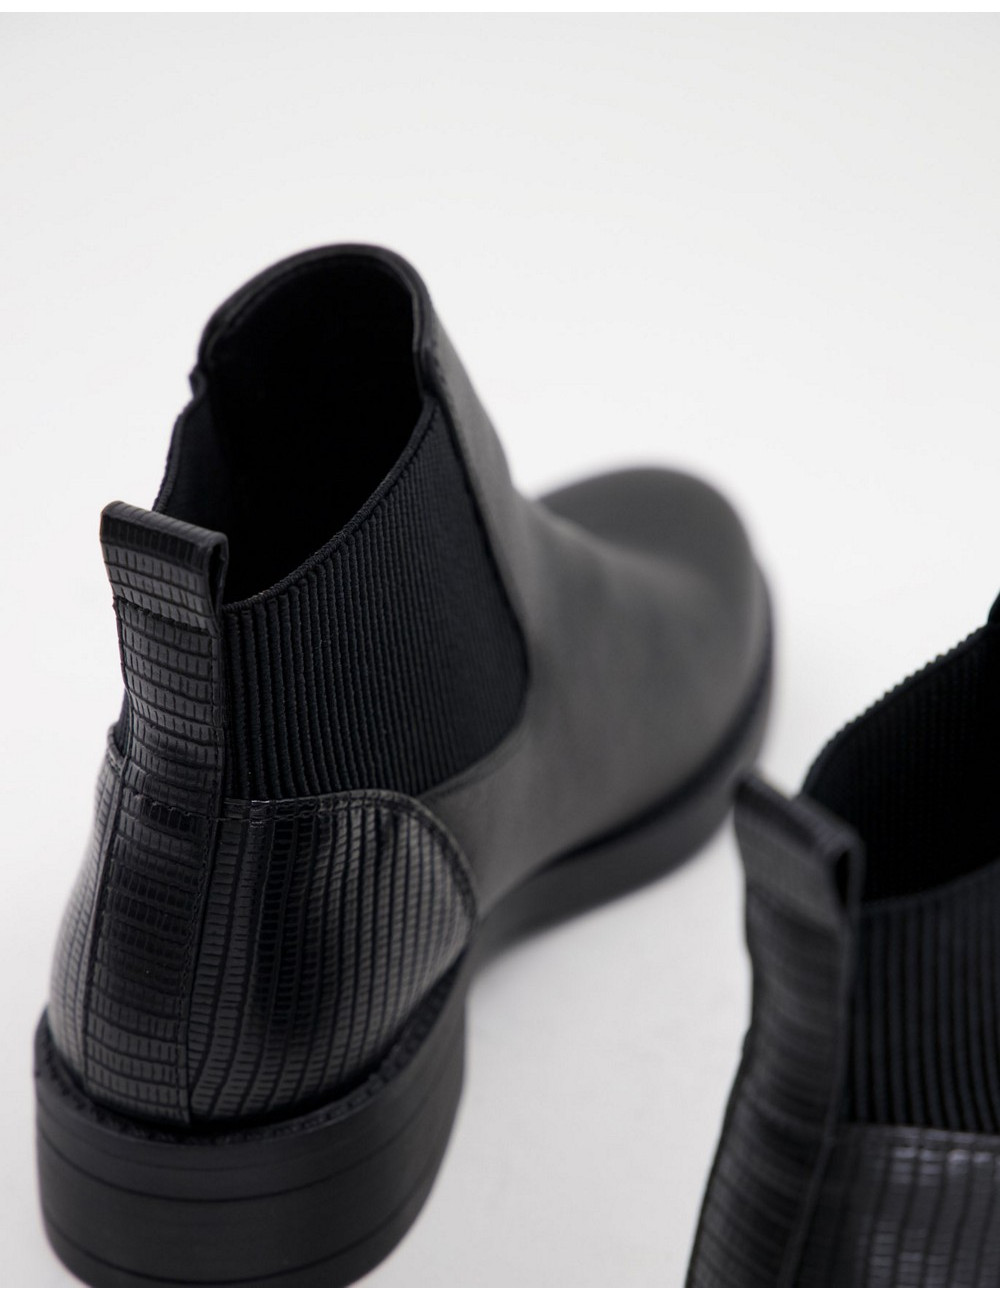 New Look chelsea boot in black